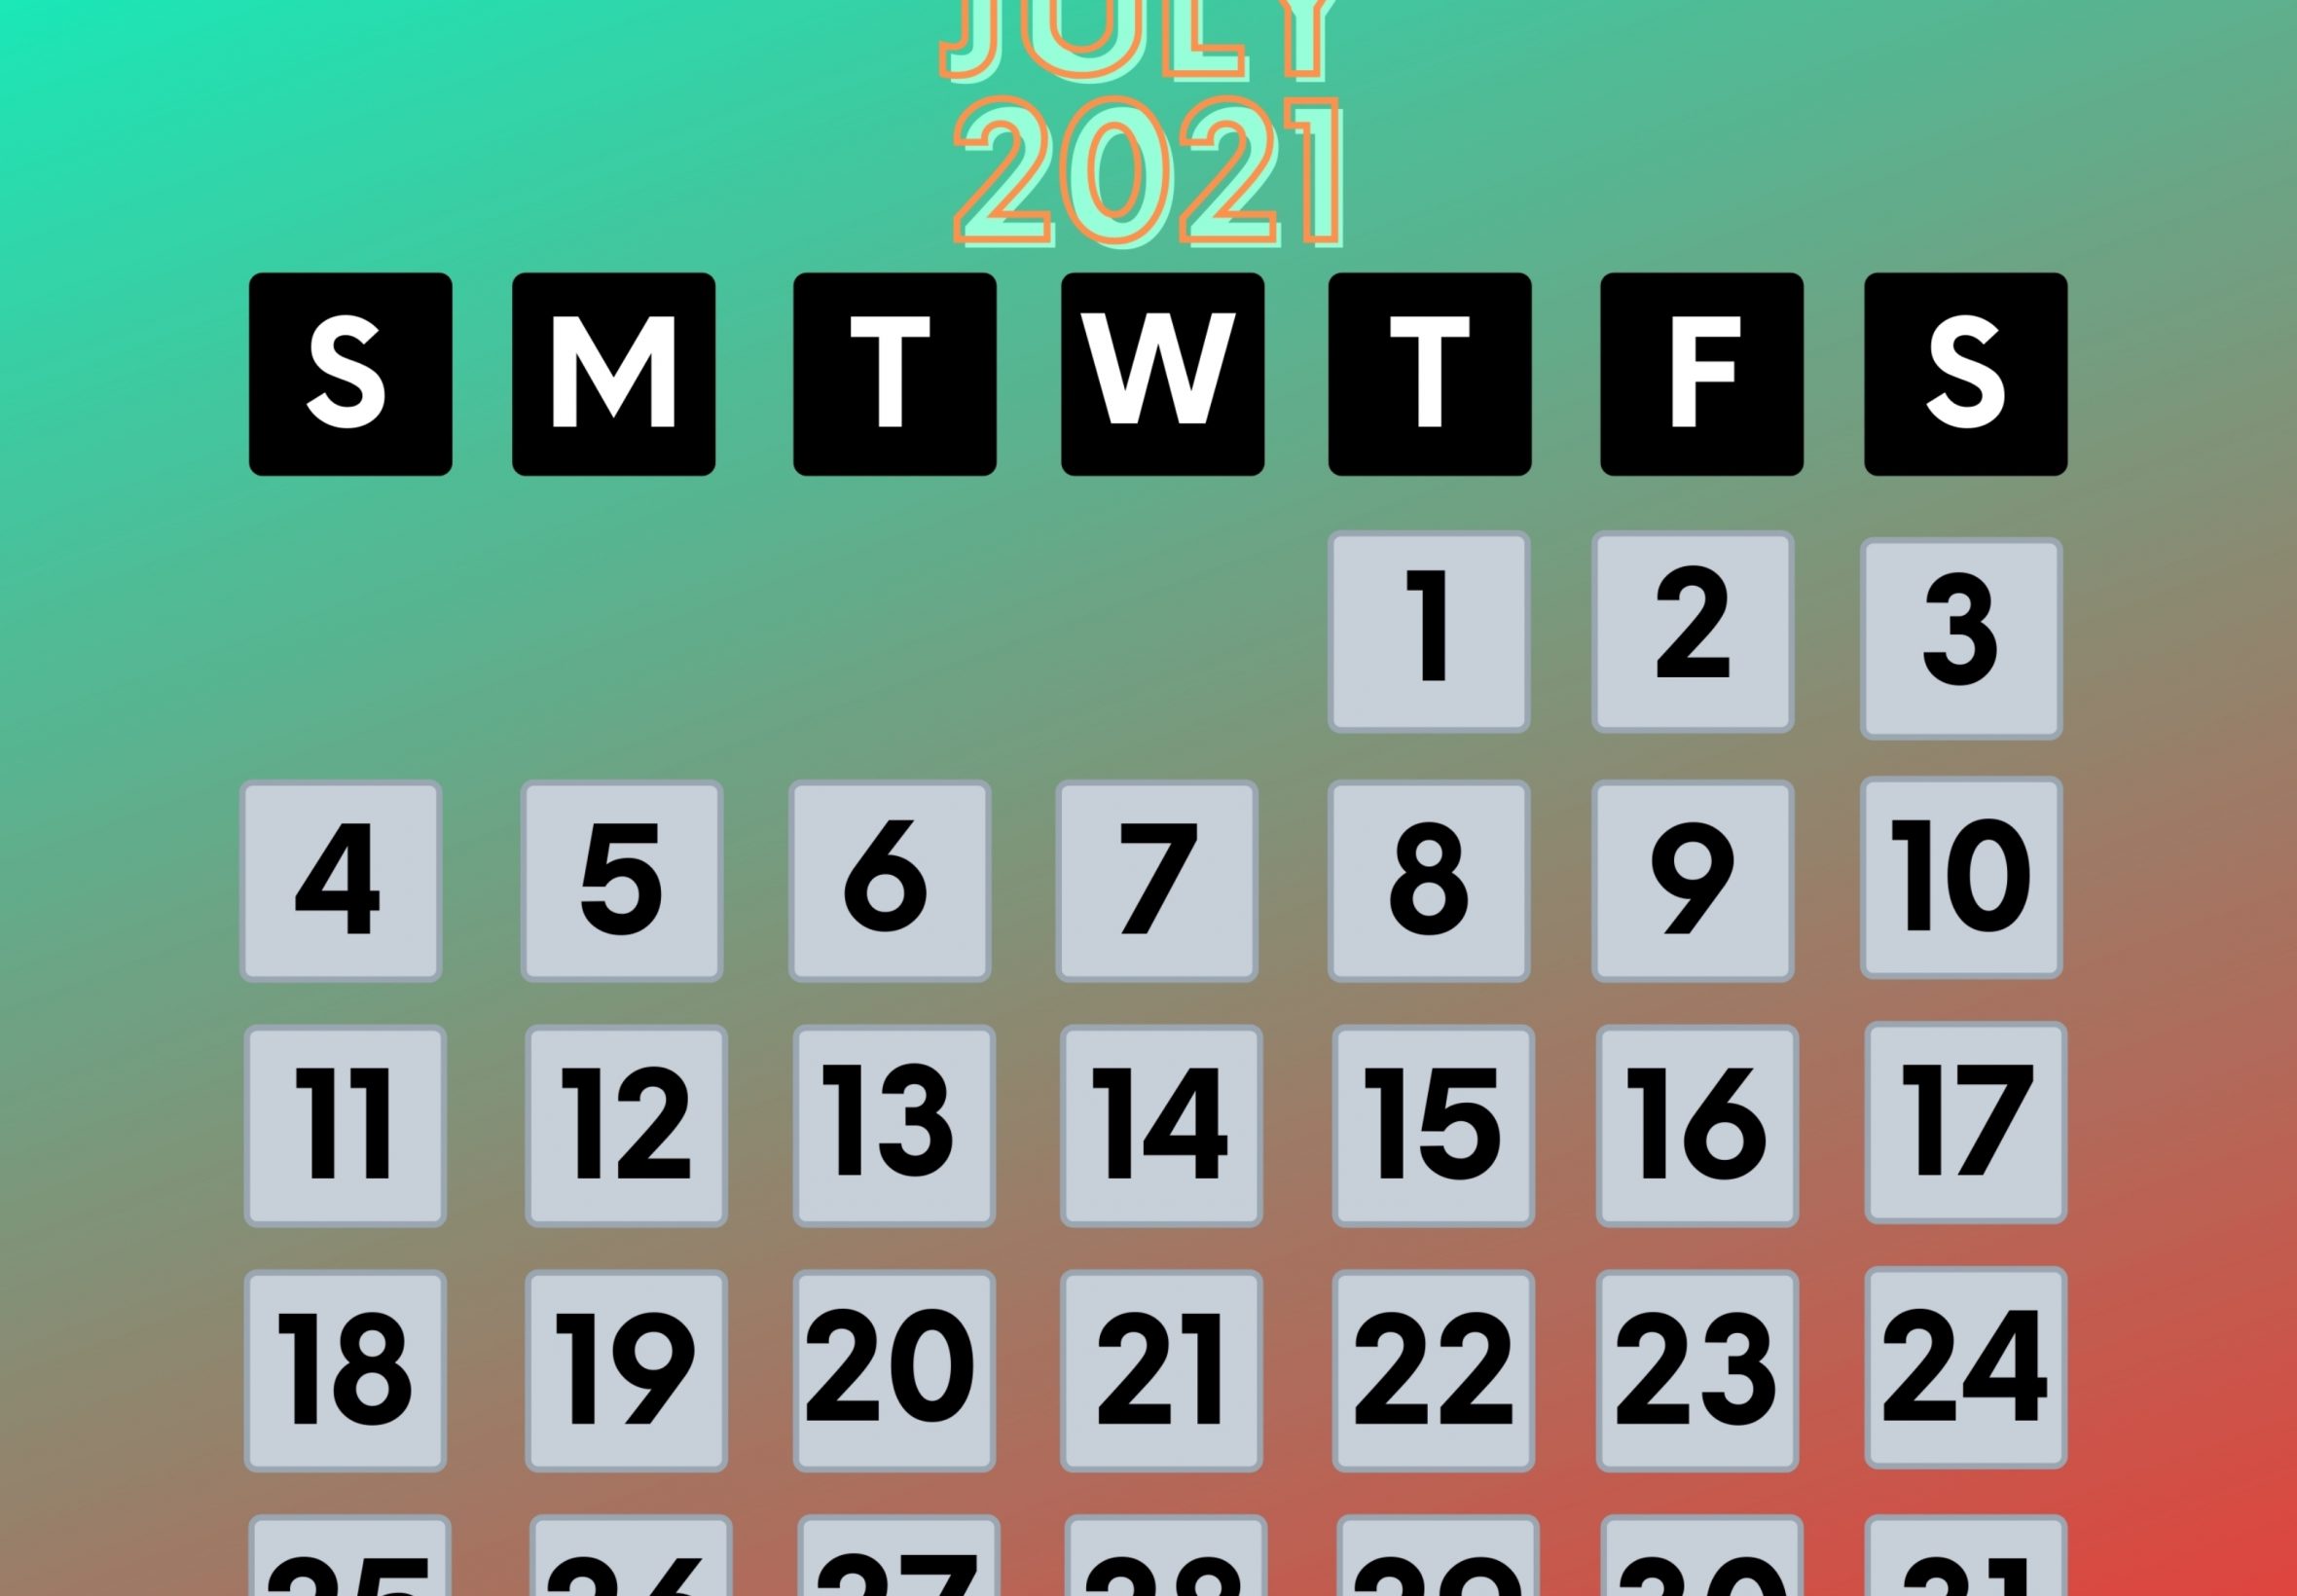 2360x1640 iPad Air wallpaper 4k July 2021 Calendar iPad Wallpaper 2360x1640 pixels resolution